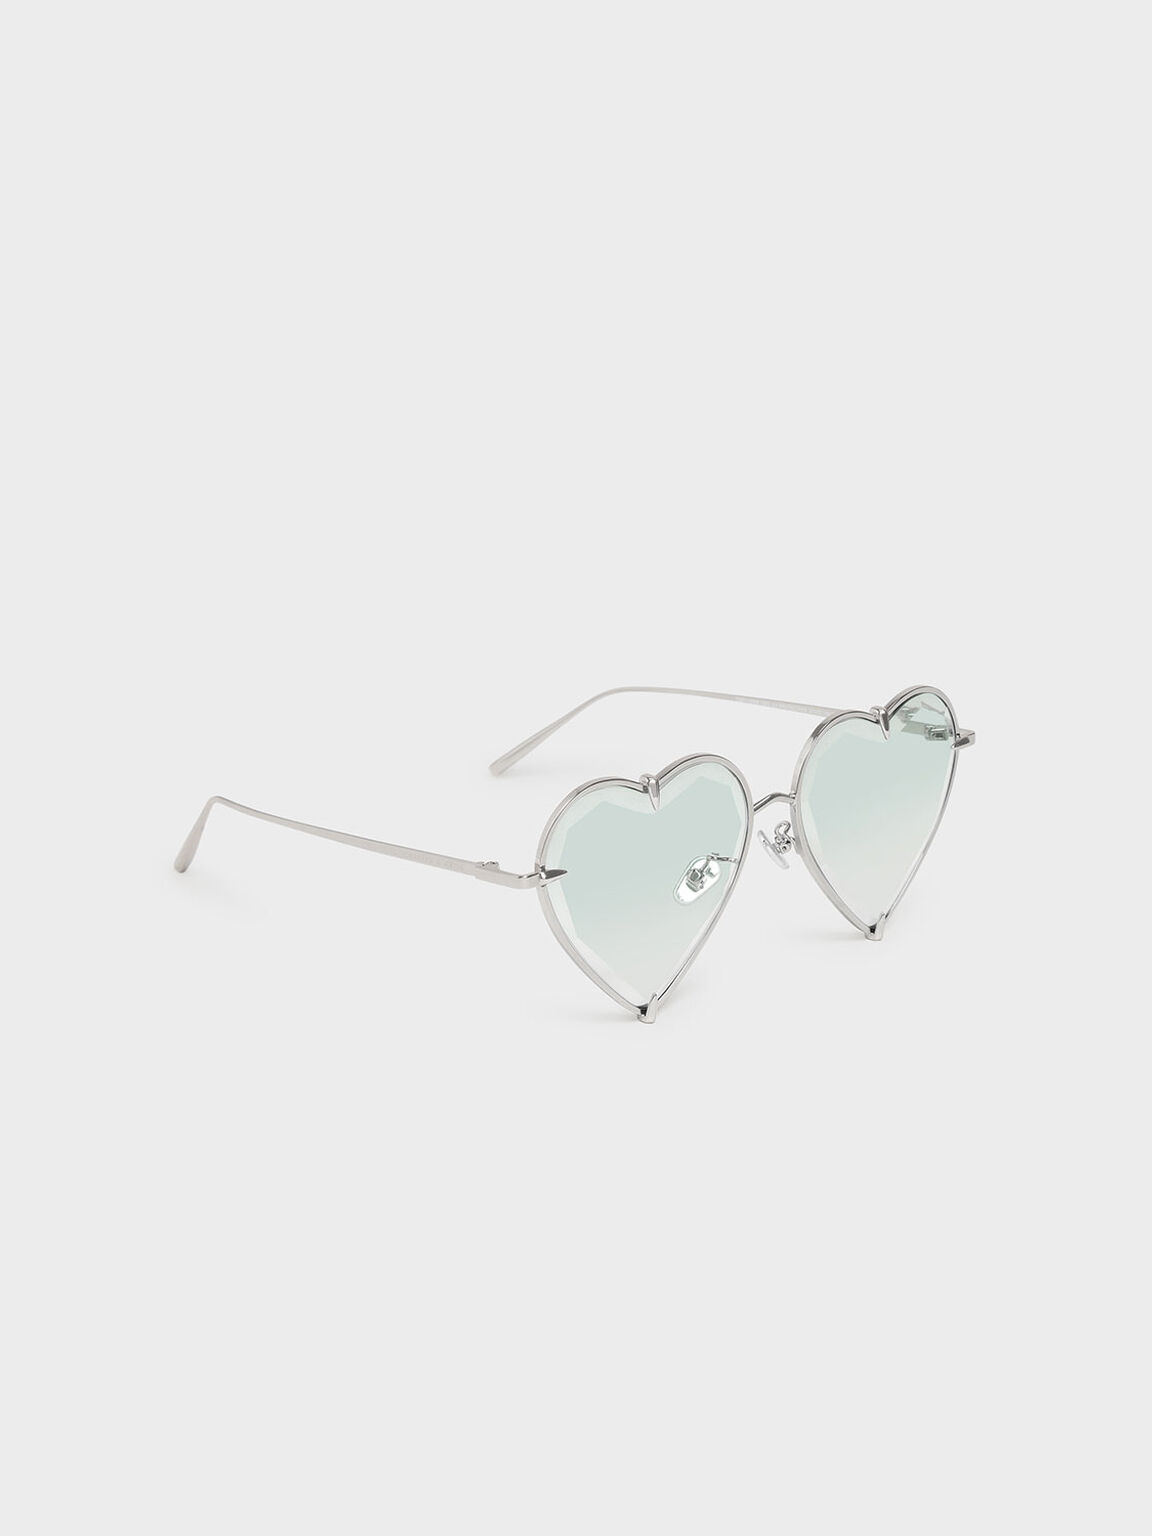 Thin Metal Frame Heart-Shaped Sunglasses, Multi, hi-res